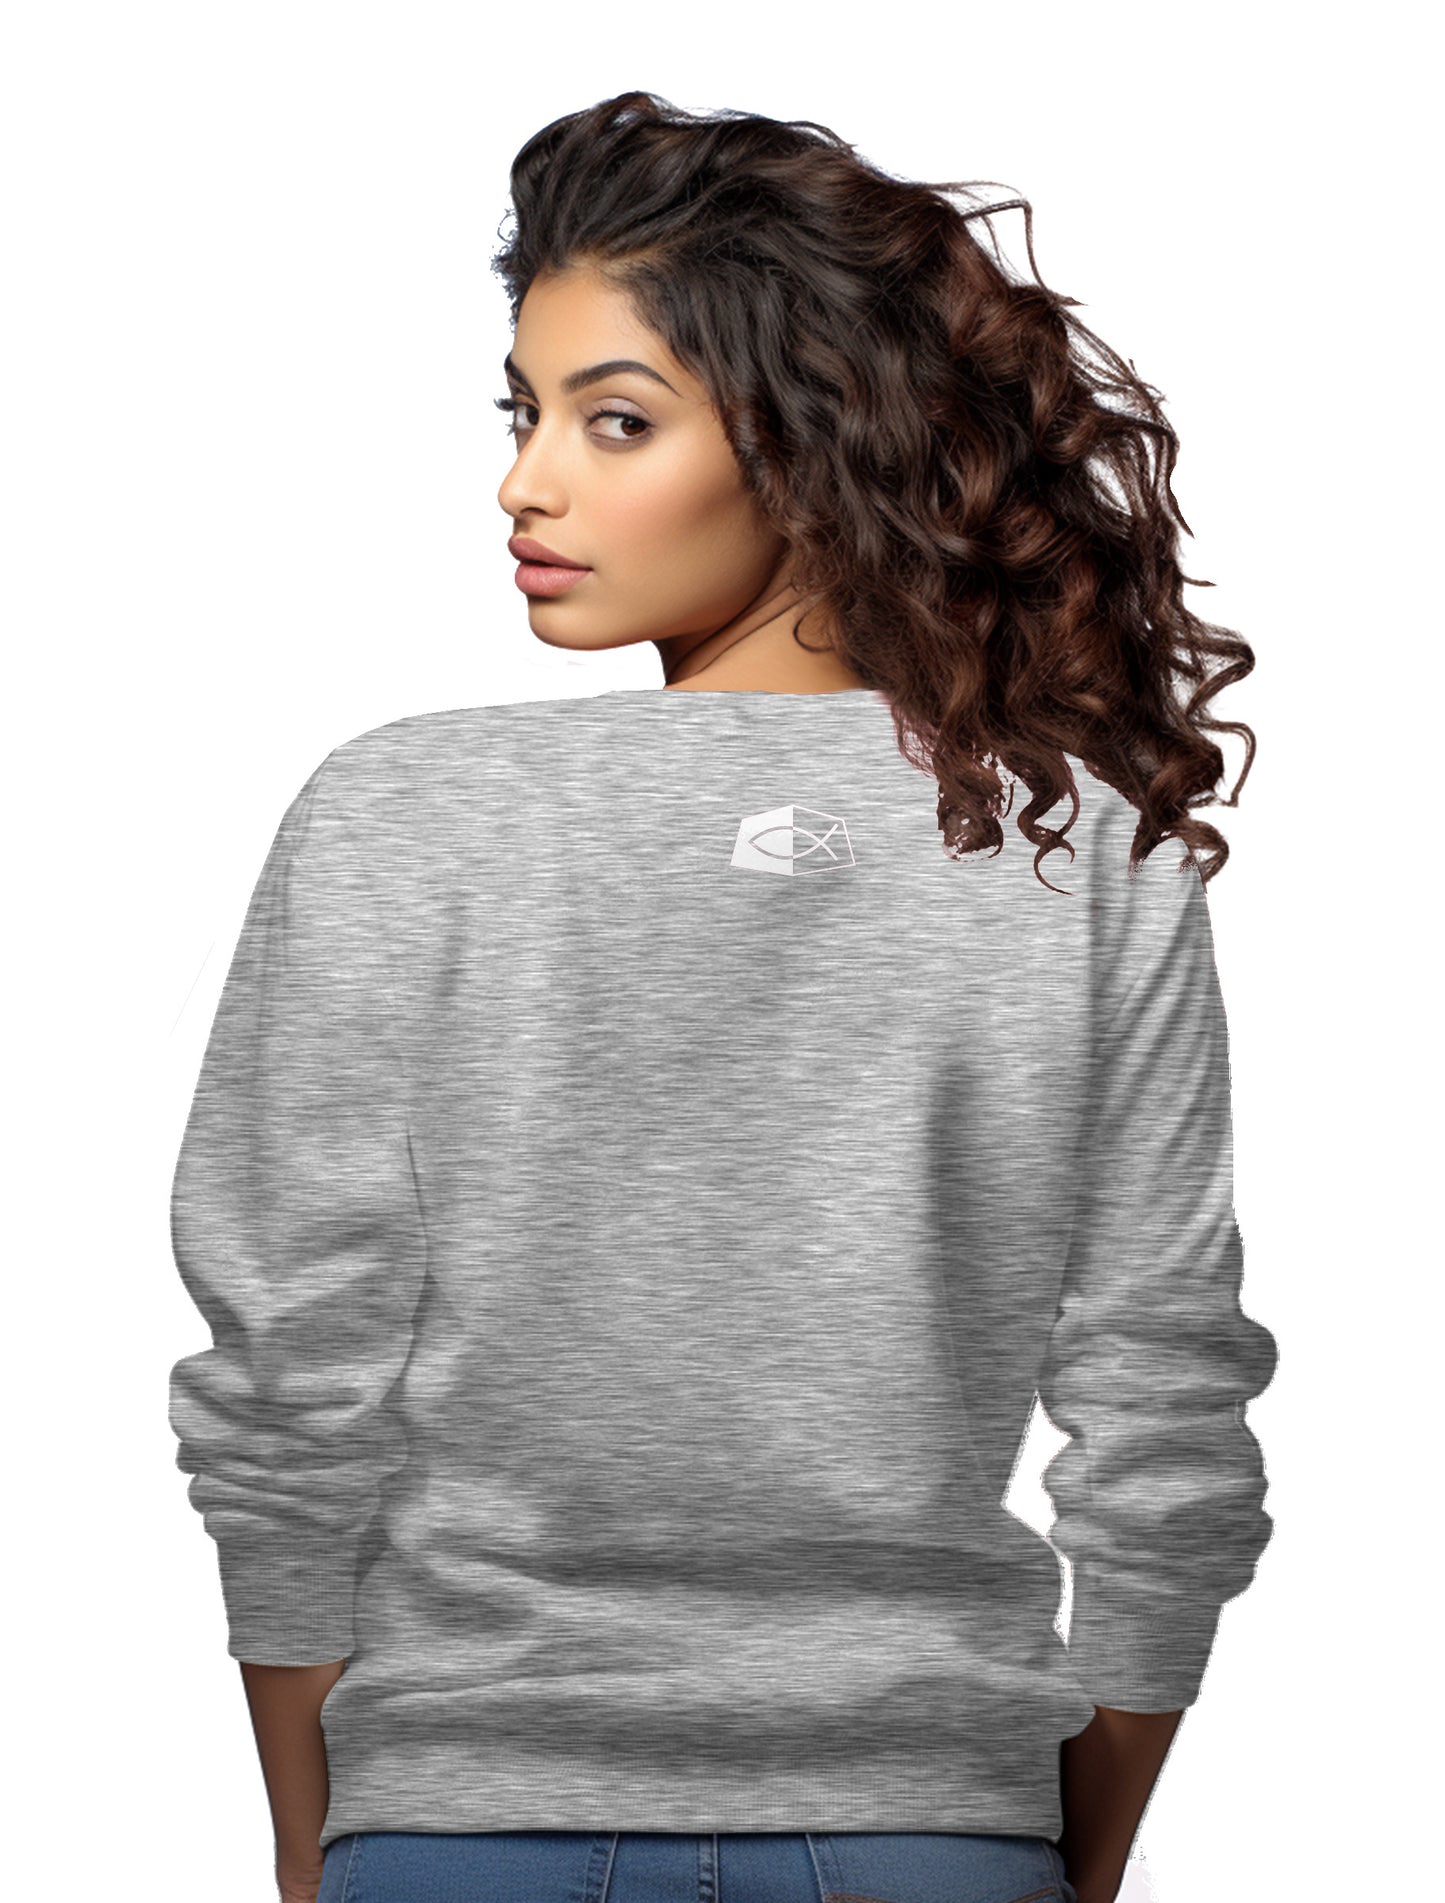 DEVOTION 1 John 4:16- Women’s premium Unisex sweatshirt